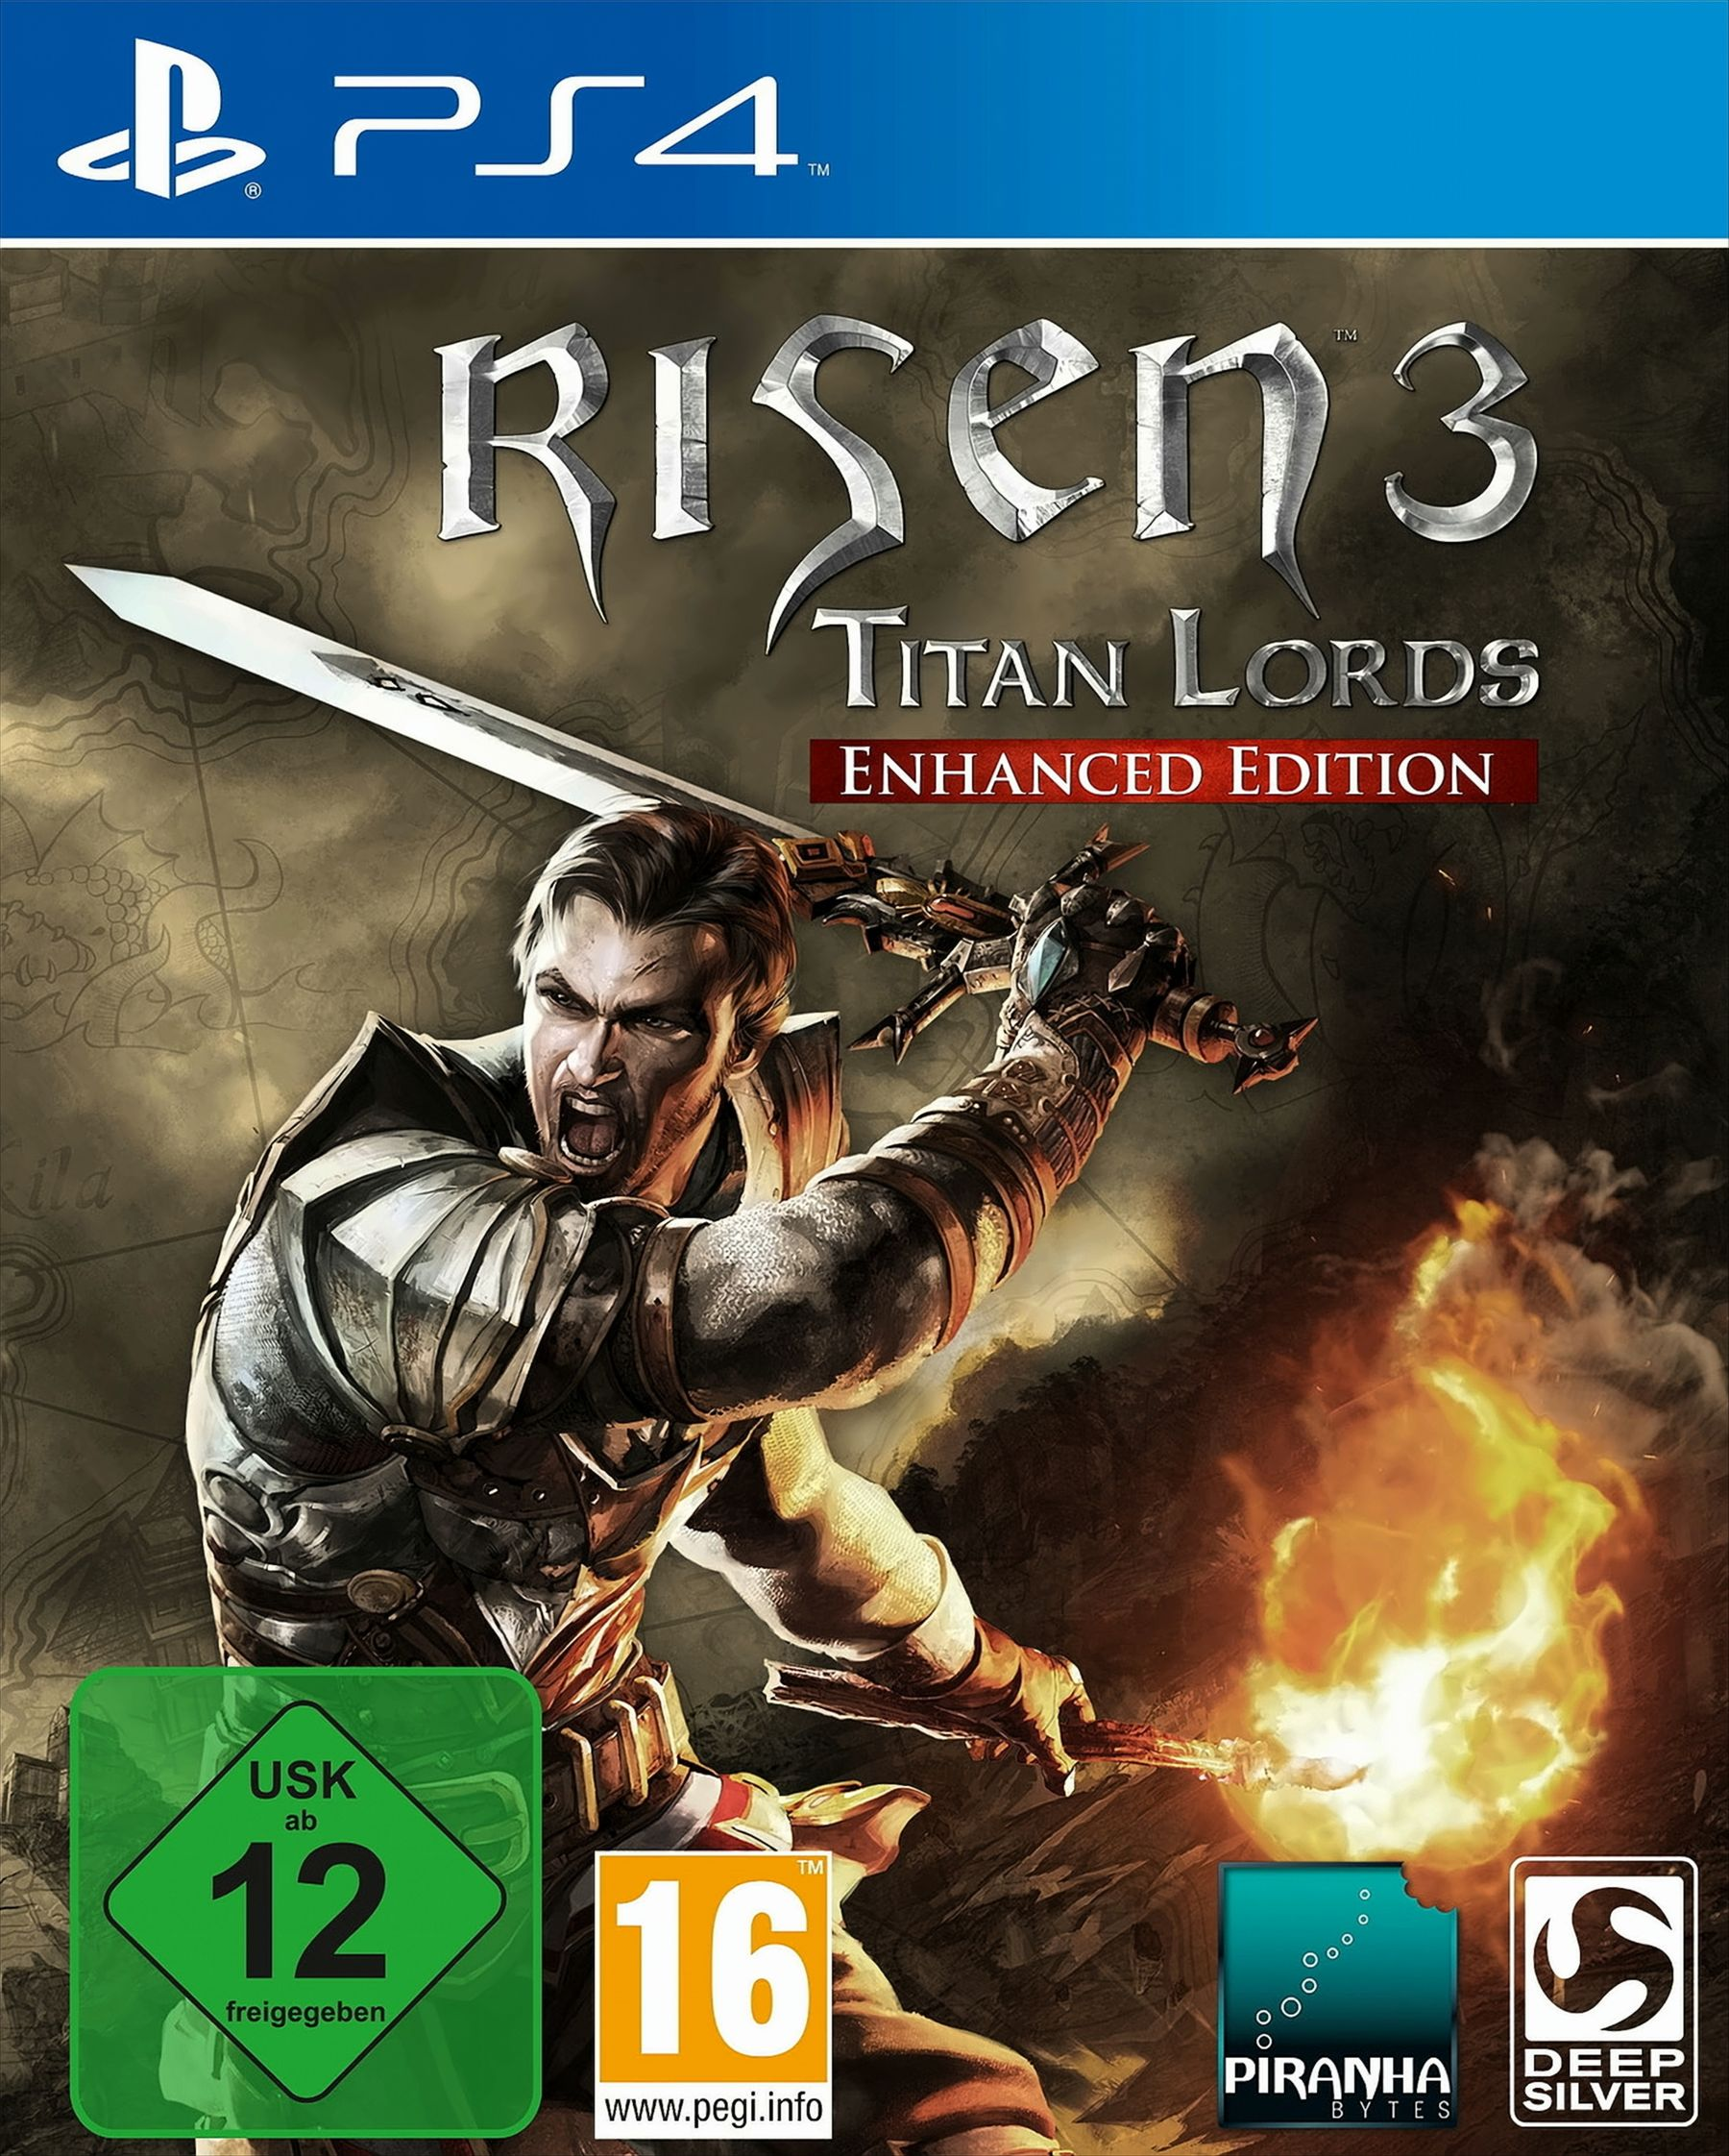 Lords (Enhanced - Titan 4] Risen 3 - Edition) [PlayStation